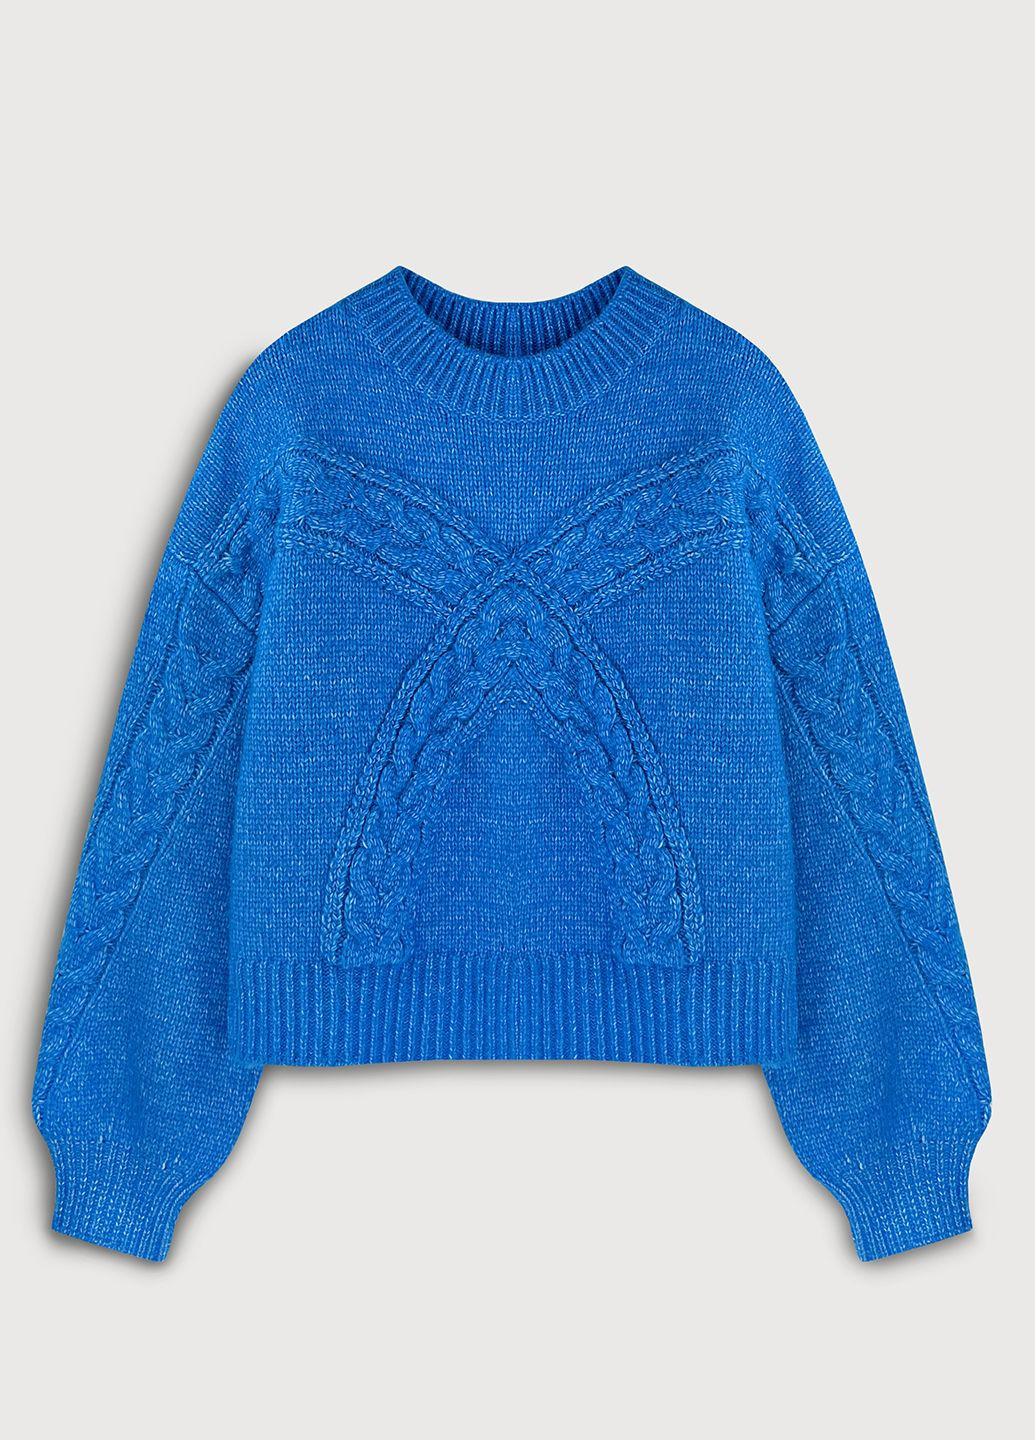 Синий демисезонный свитер оверсайз C&A